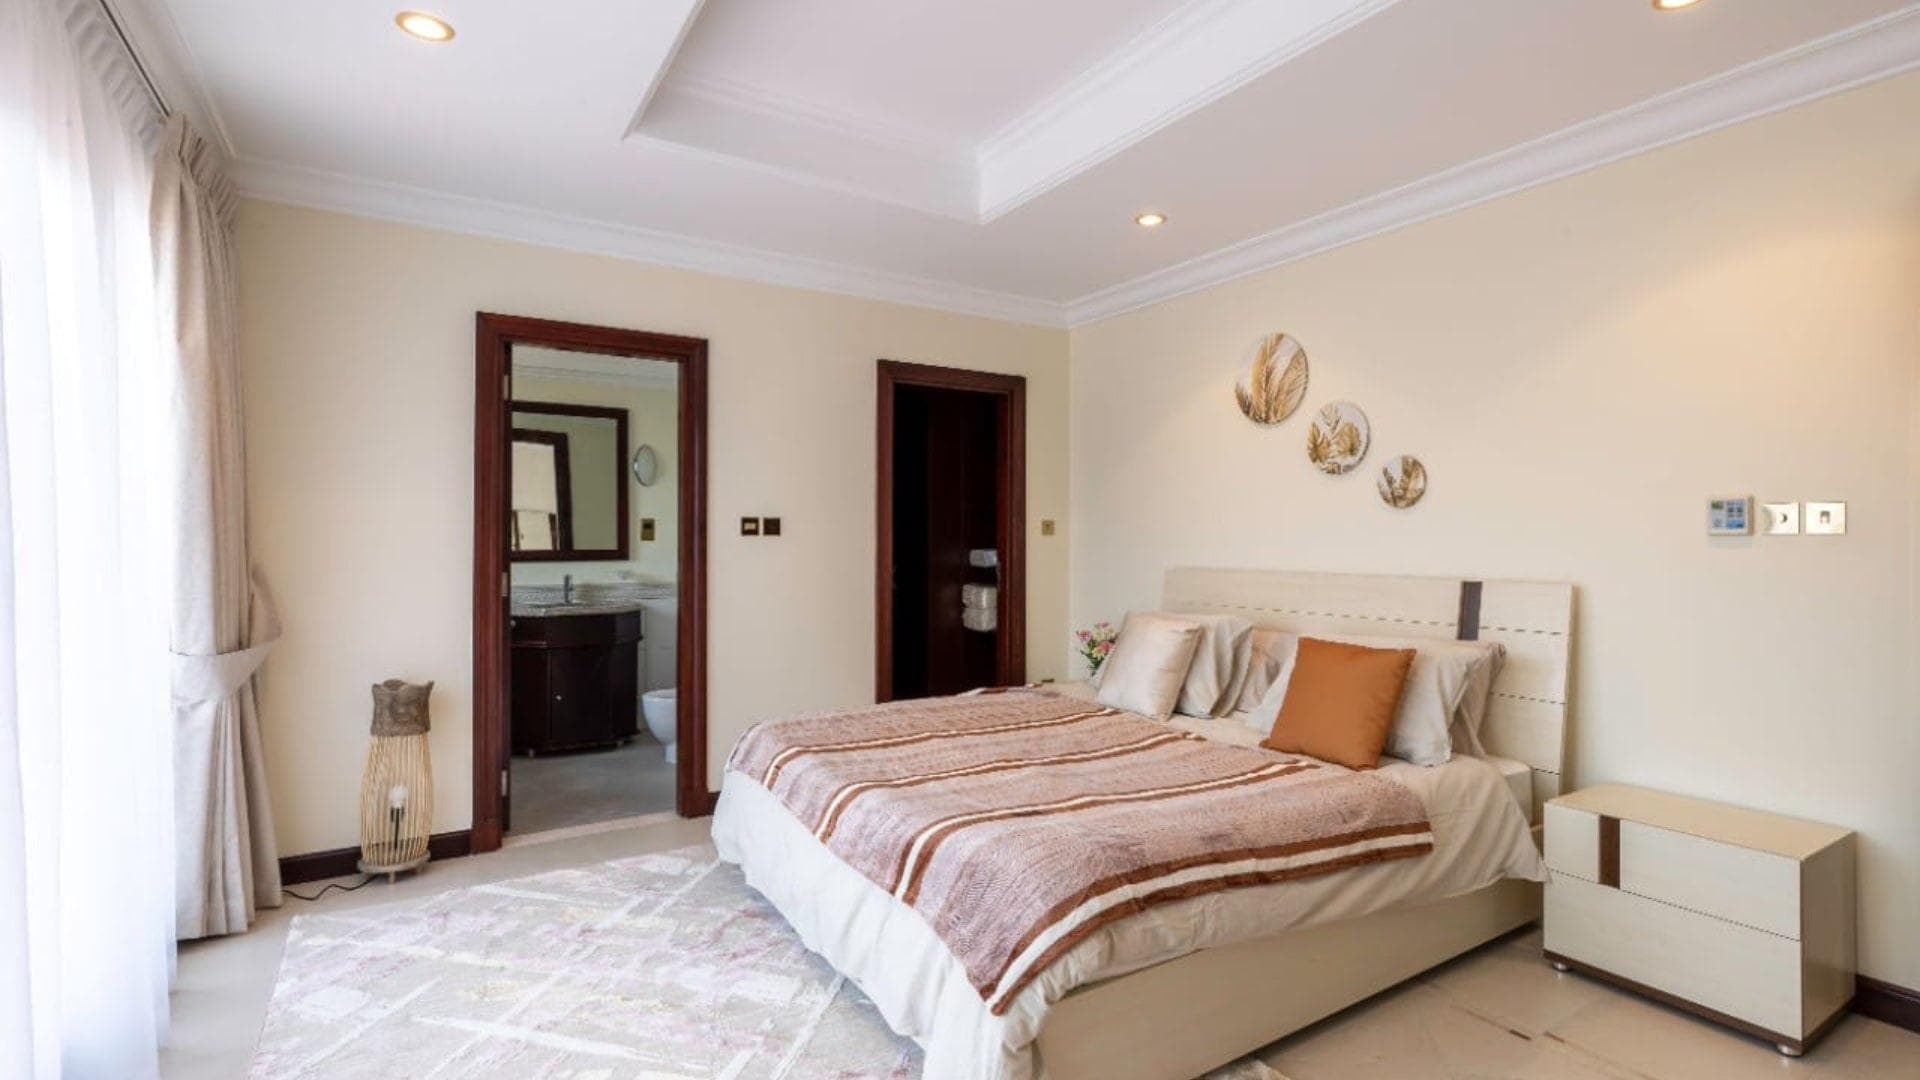 4 Bedroom Villa For Rent Garden Homes Lp15976 12fe131d35ec6b00.jpg